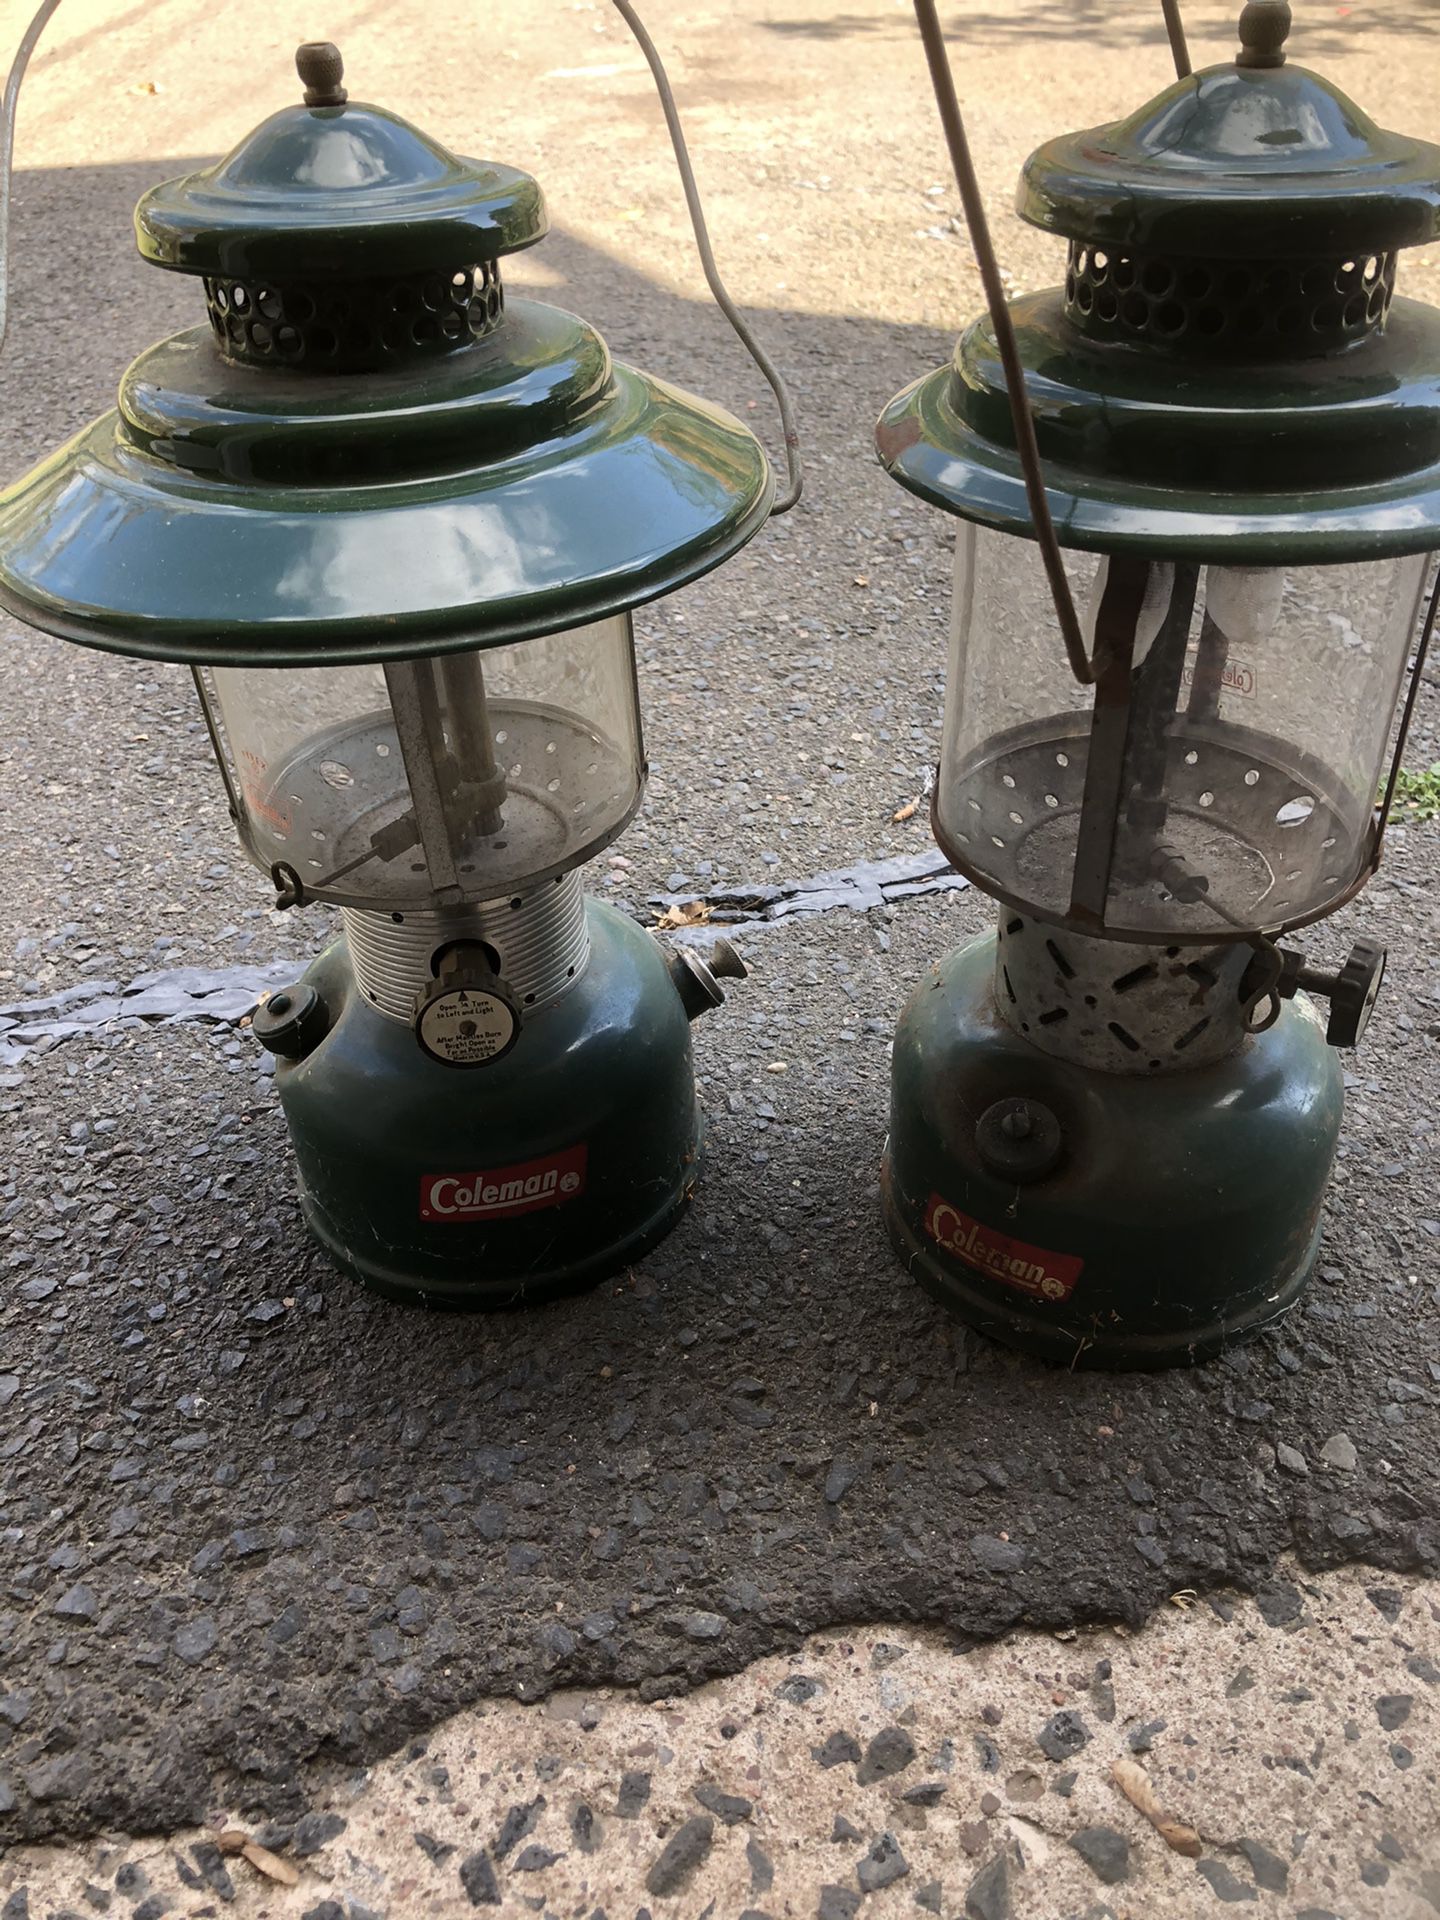 Two vintage Coleman gas lanterns